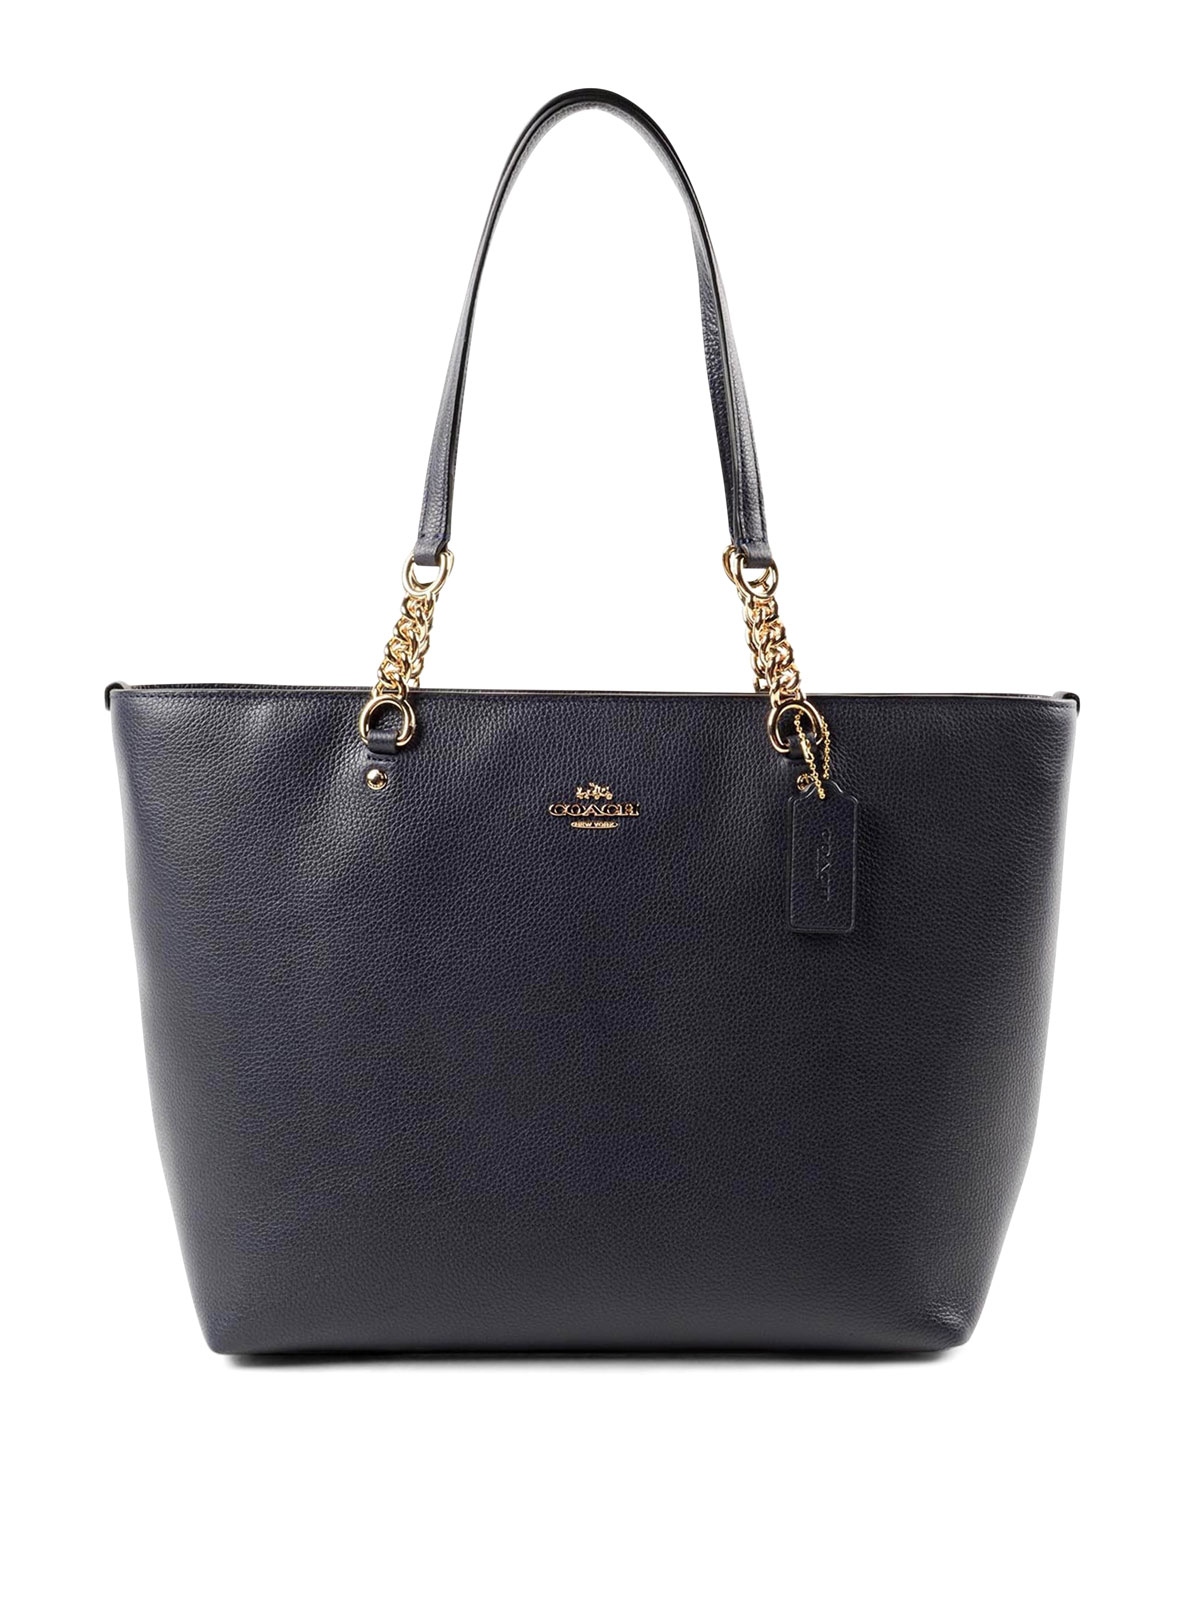 Totes bags Coach - Sophia pebble leather tote - 36600LINAVY | iKRIX.com